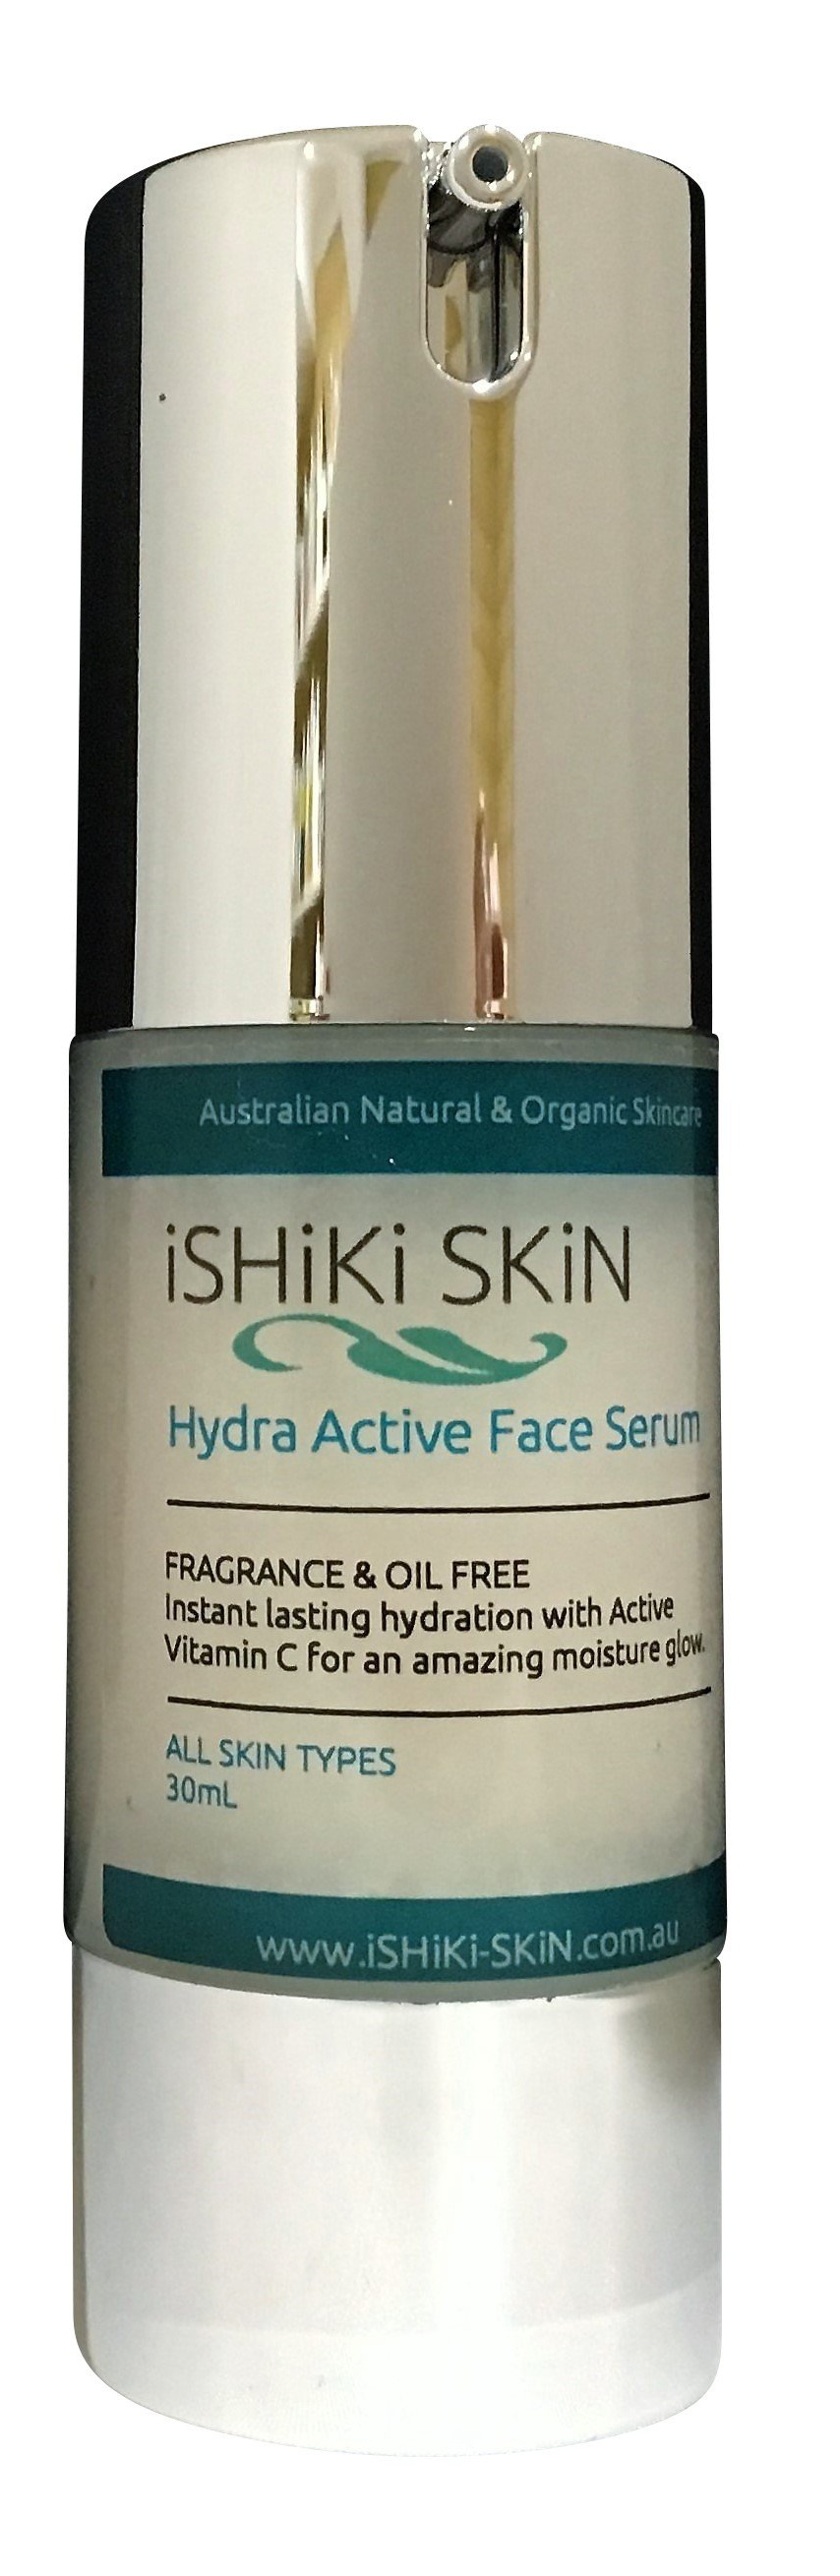 iSHiKi SKiN Hydra Active Face Serum